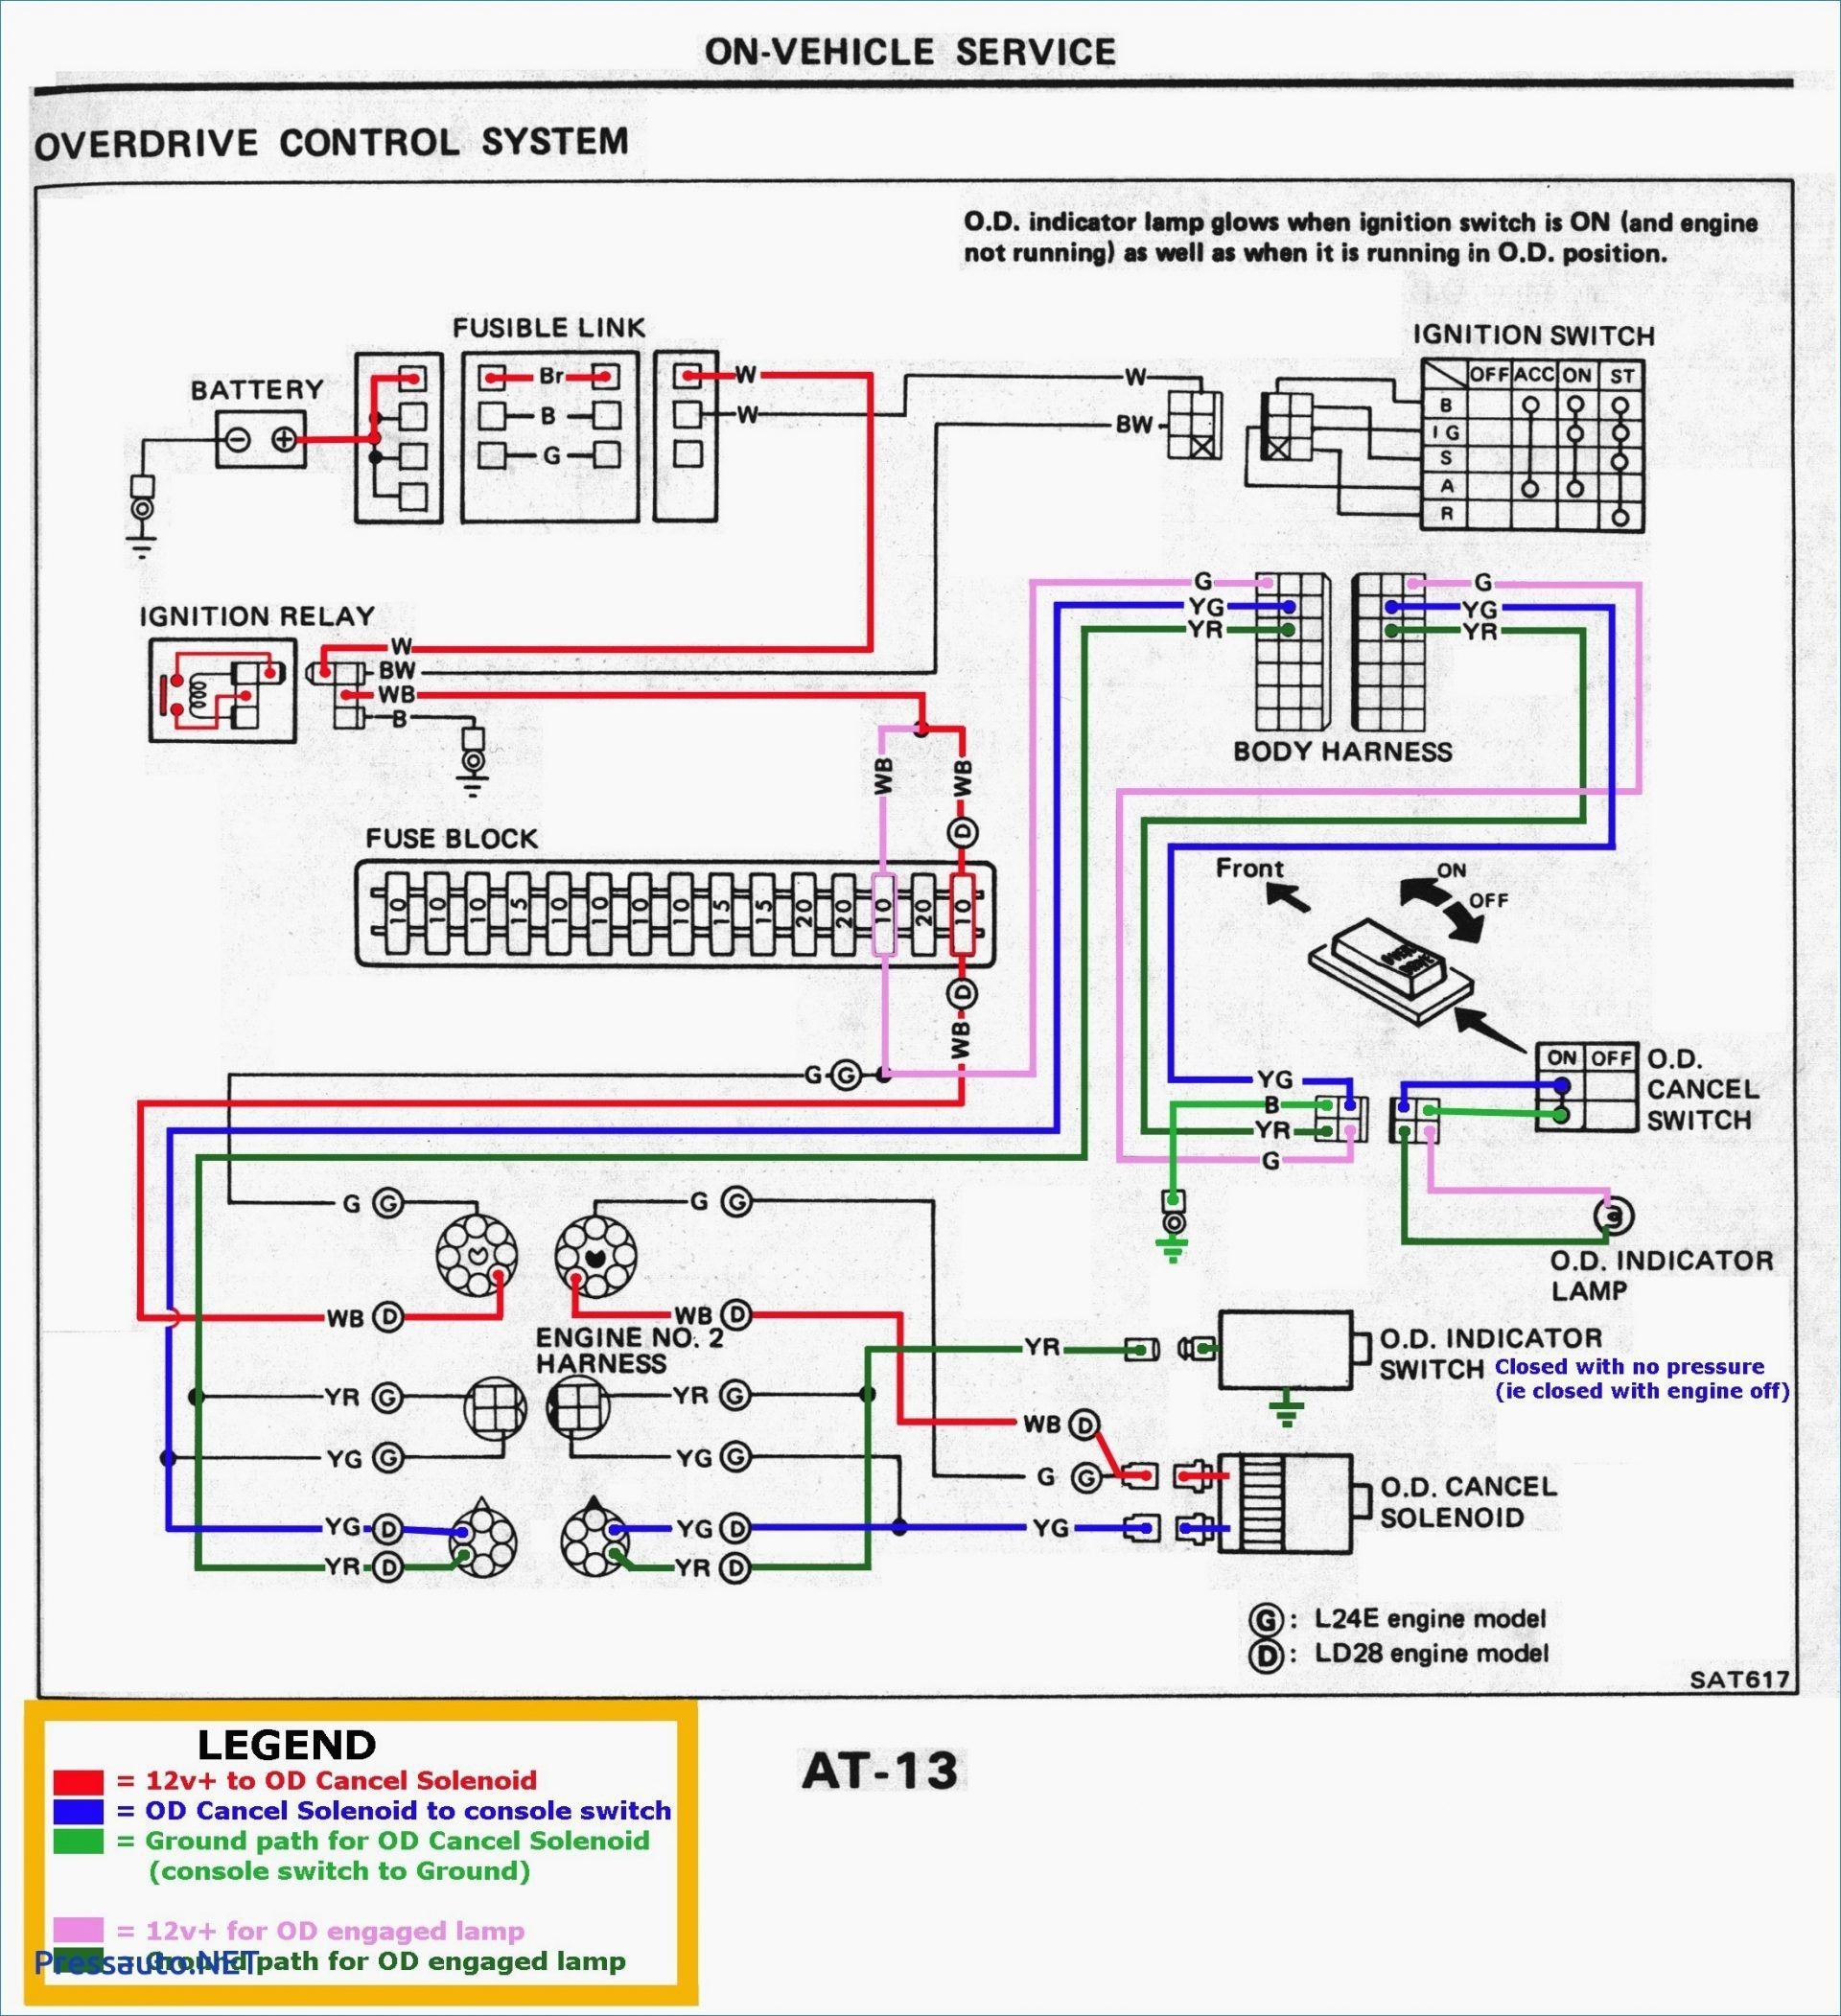 2007 buick lucerne engine diagram 1988 toyota pickup wiring diagram collection of 2007 buick lucerne engine diagram